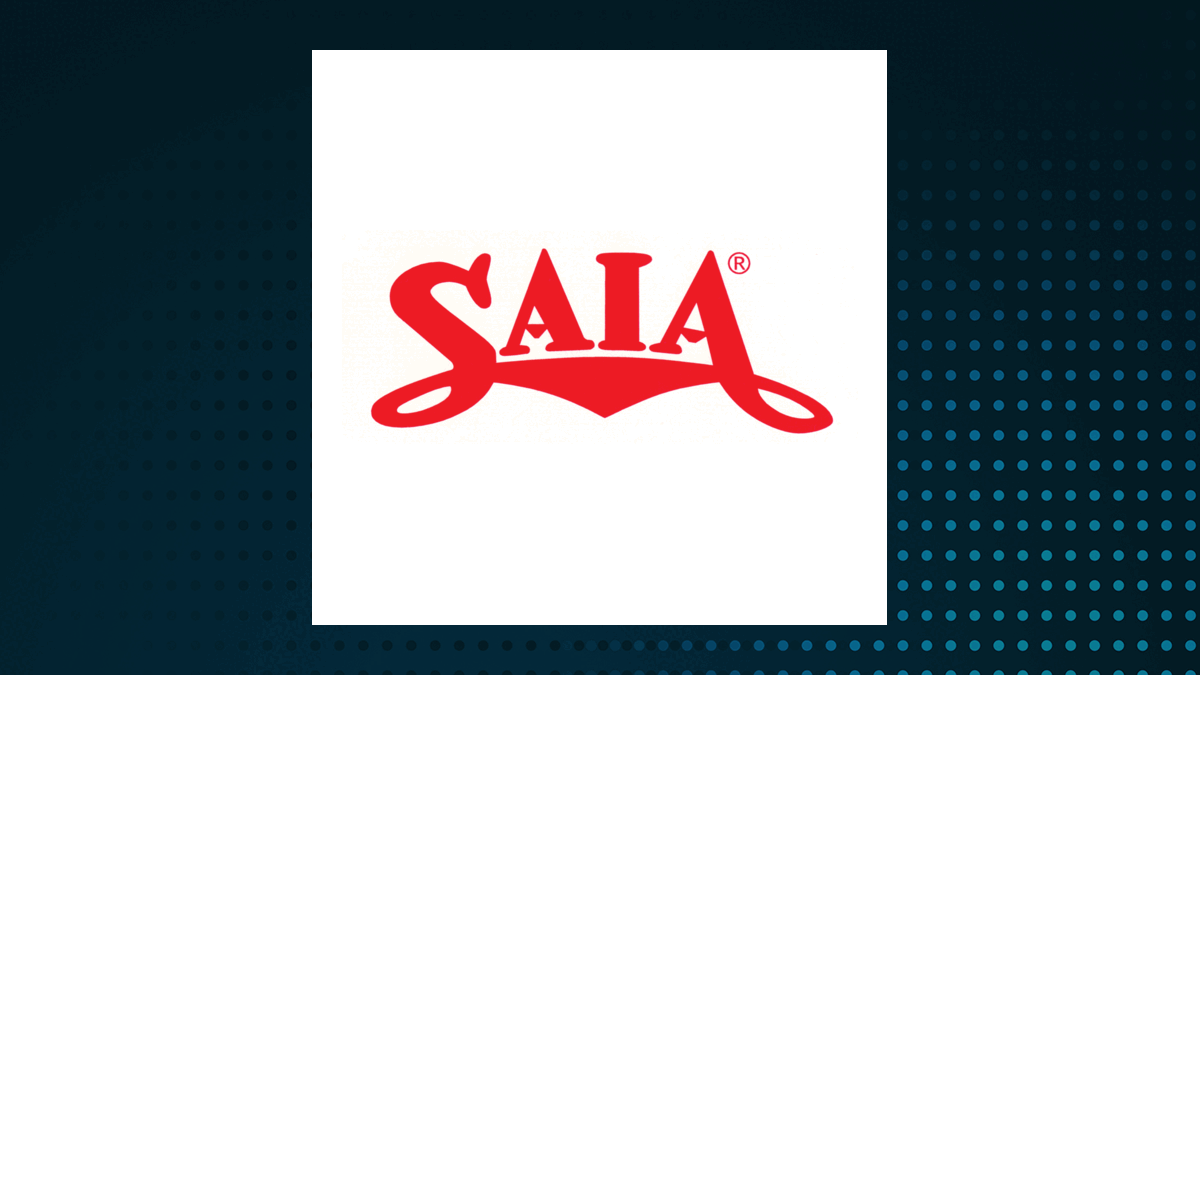 Saia logo with Transportation background